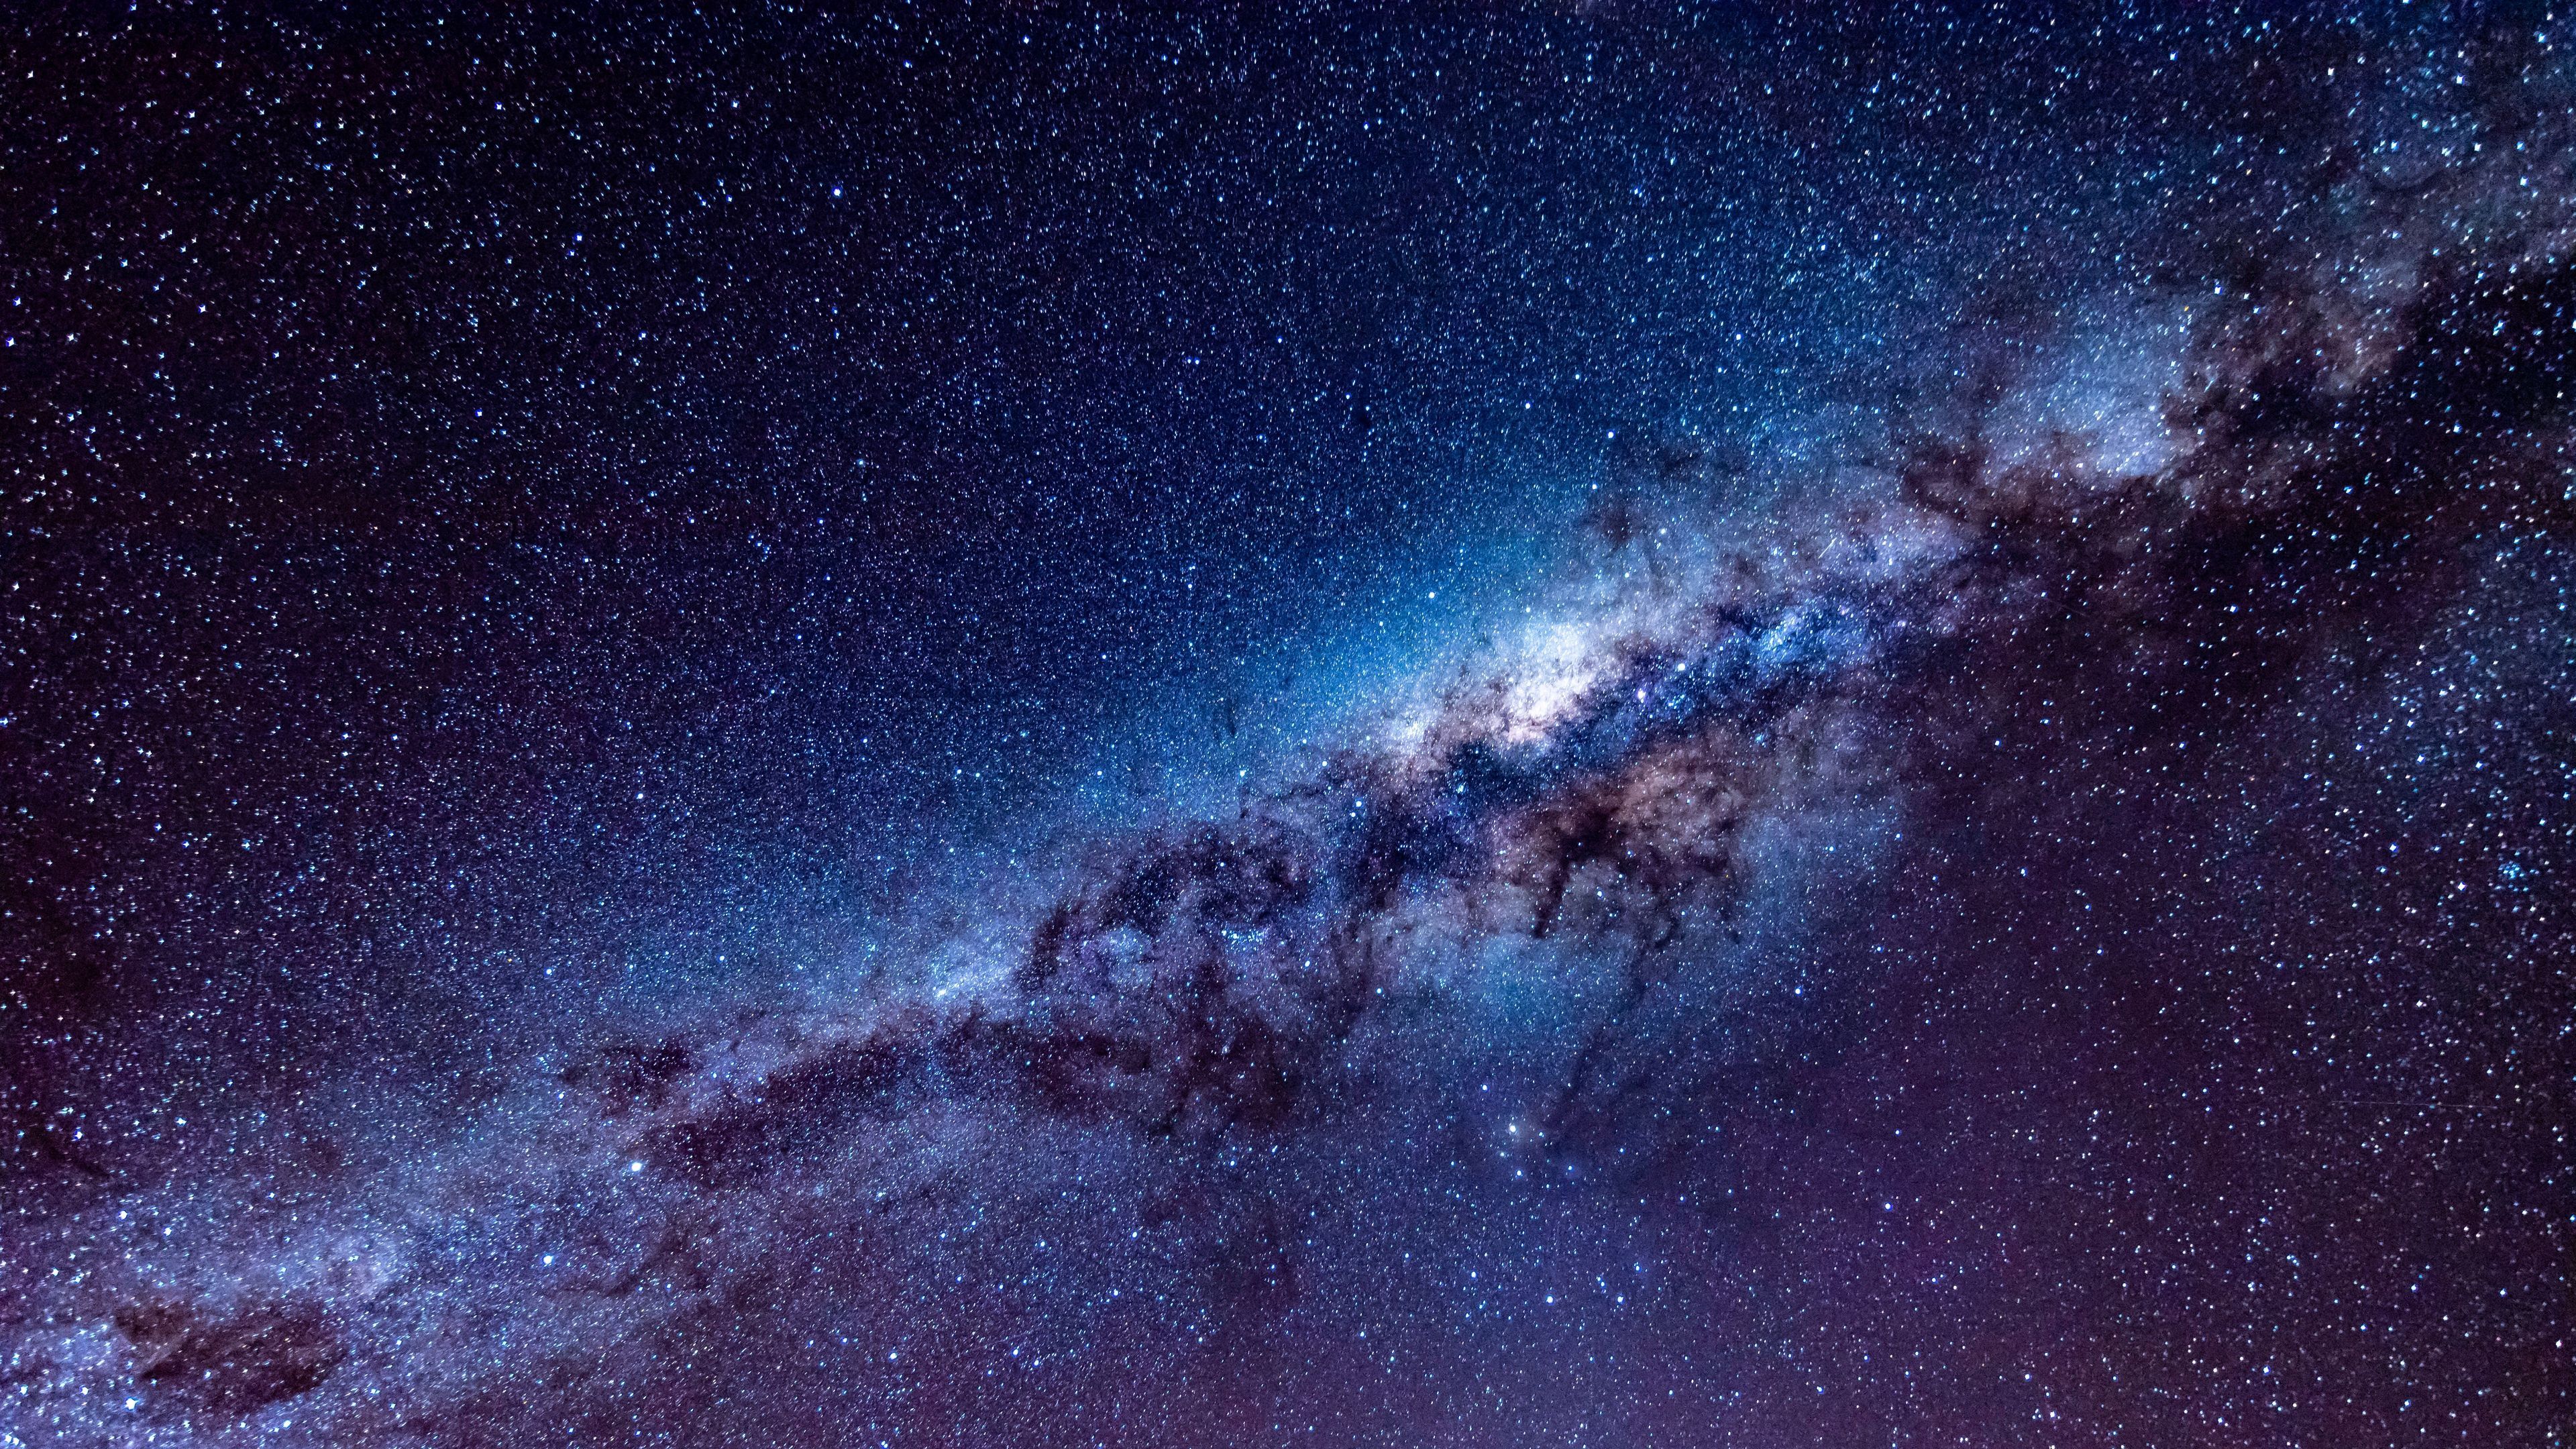 Milky Way Starry Sky 4K wallpaper. Galaxy picture, Milky way, Galaxy image